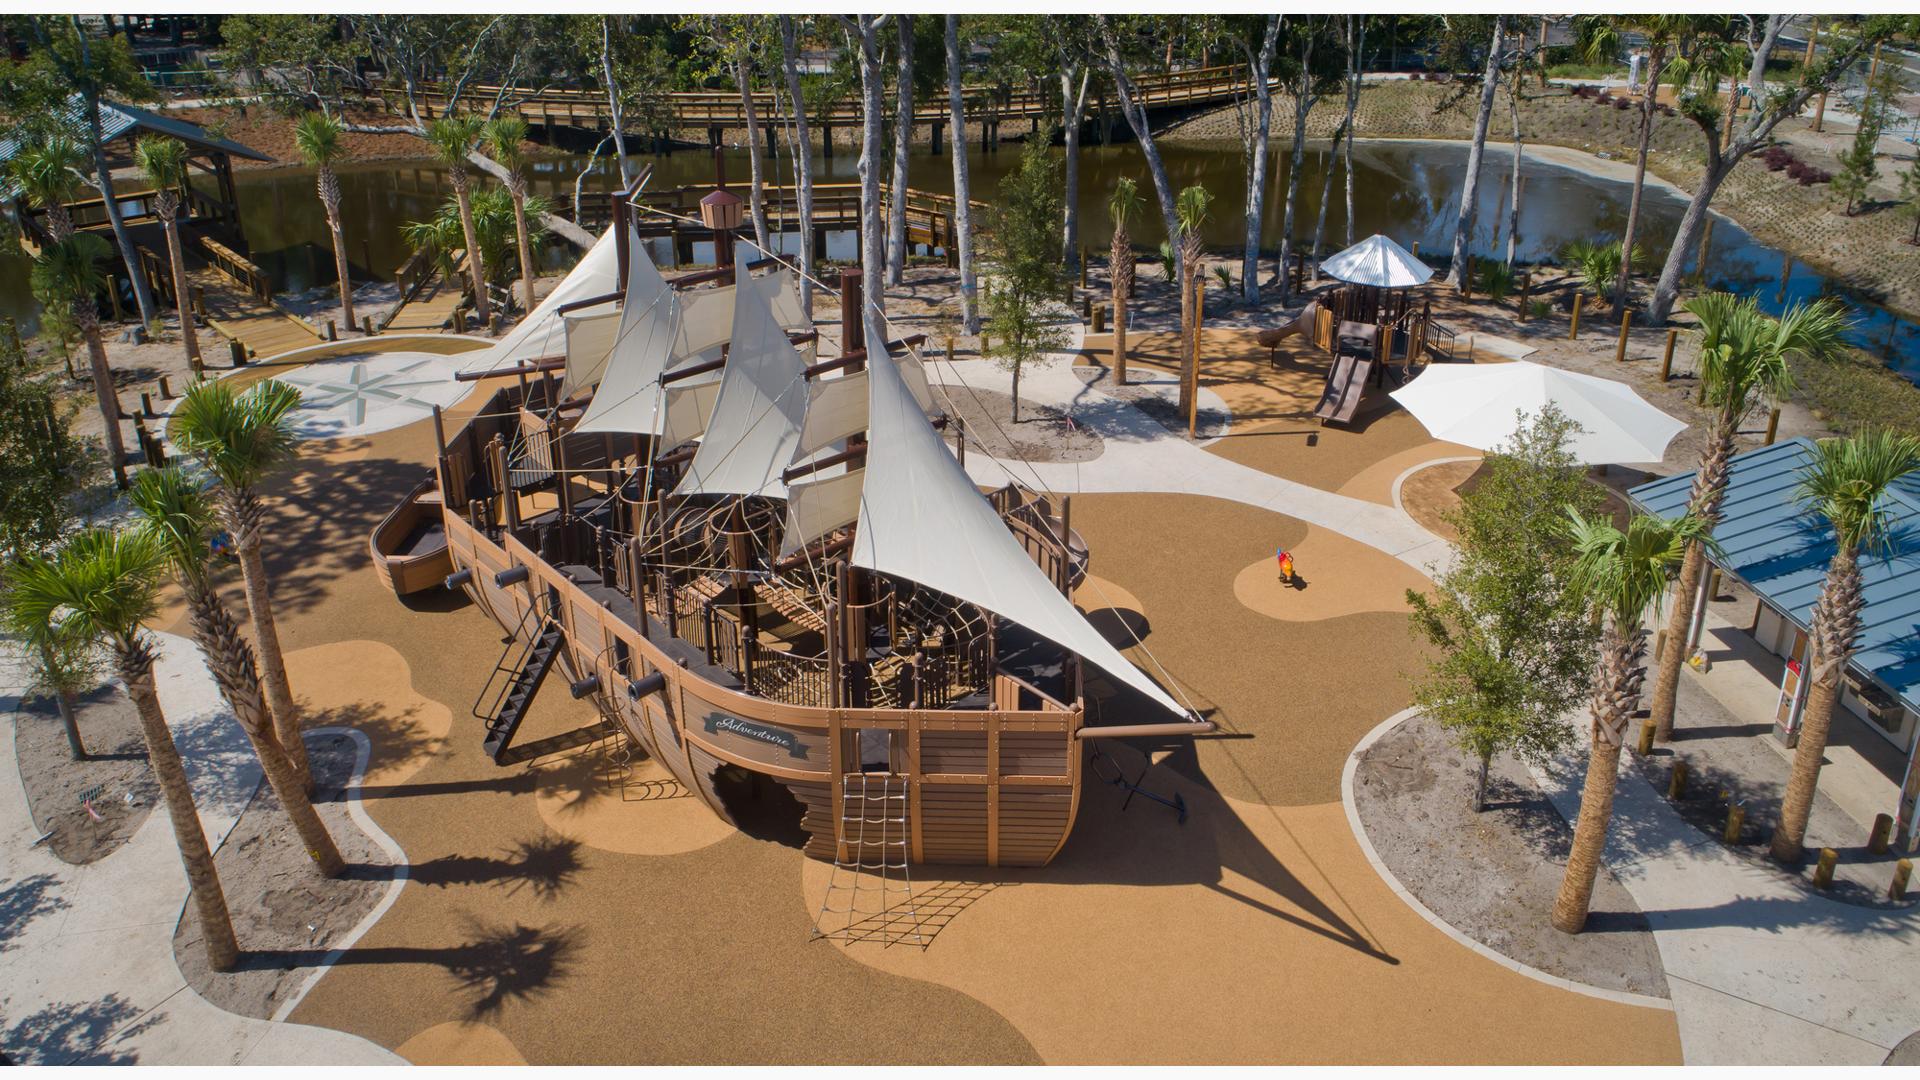 Lowcountry Celebration Park Hilton Head, SC. A custom ship themed playground.